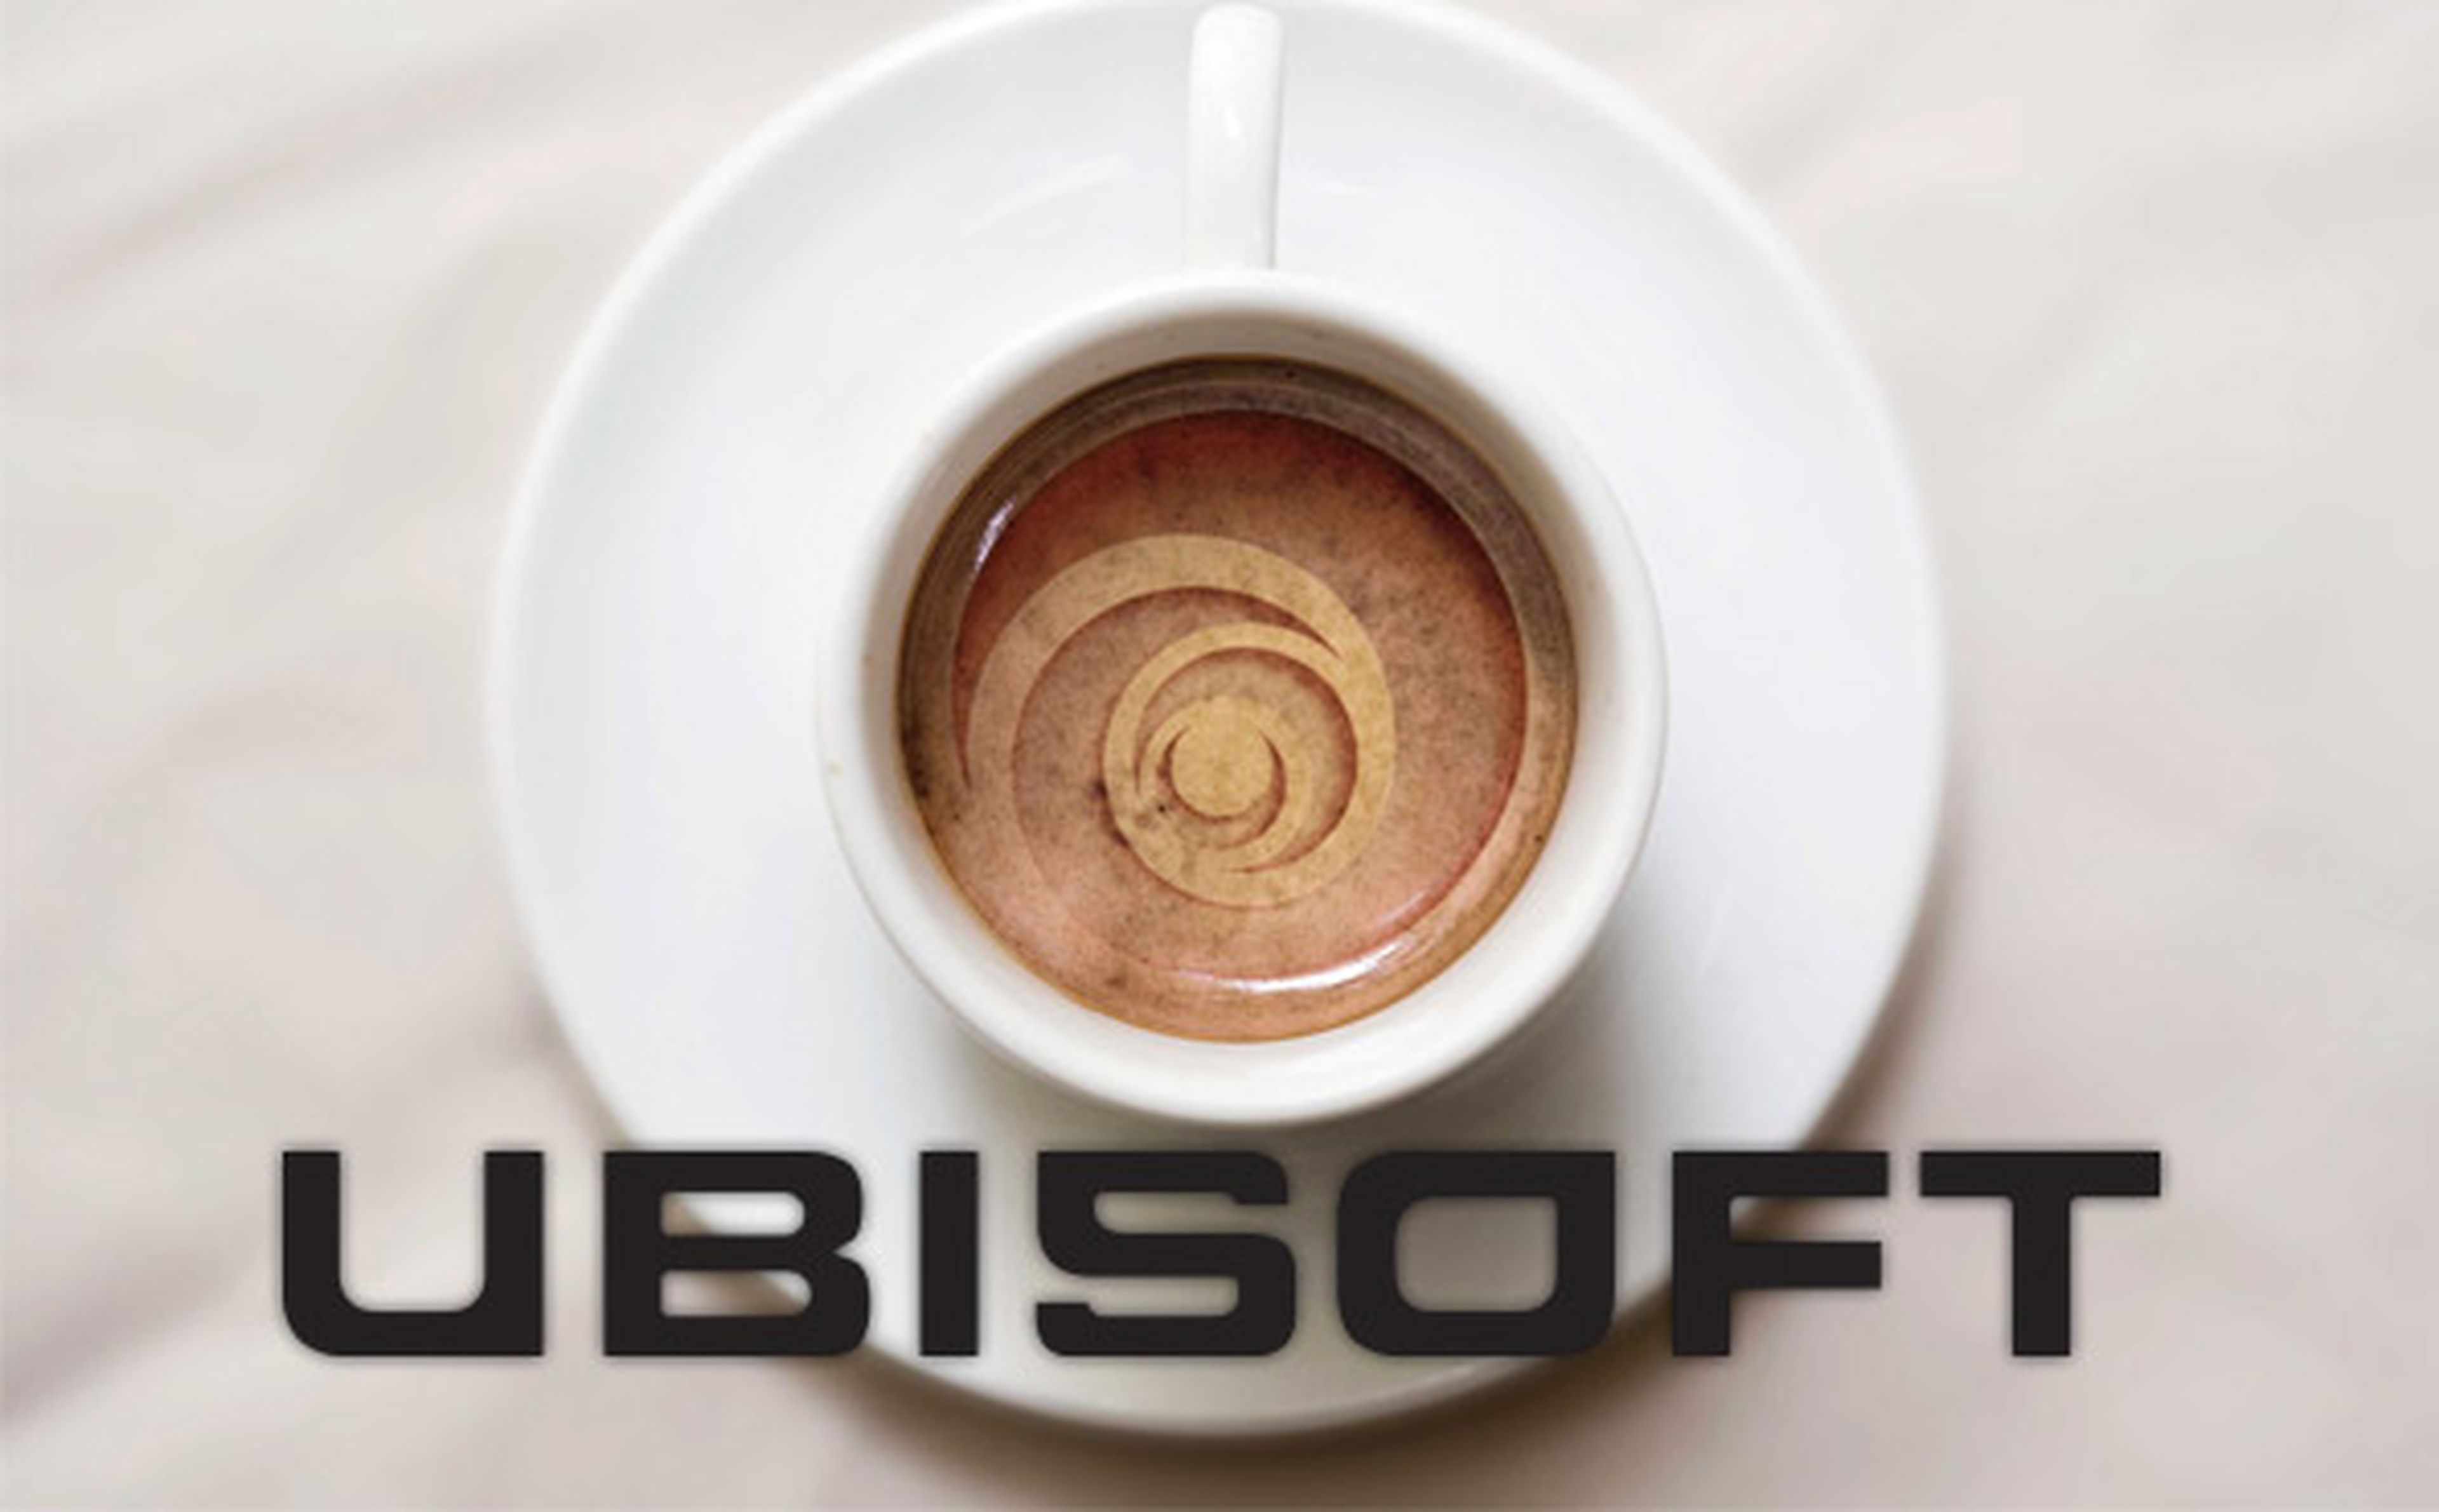 Ubisoft encantados con Project Café